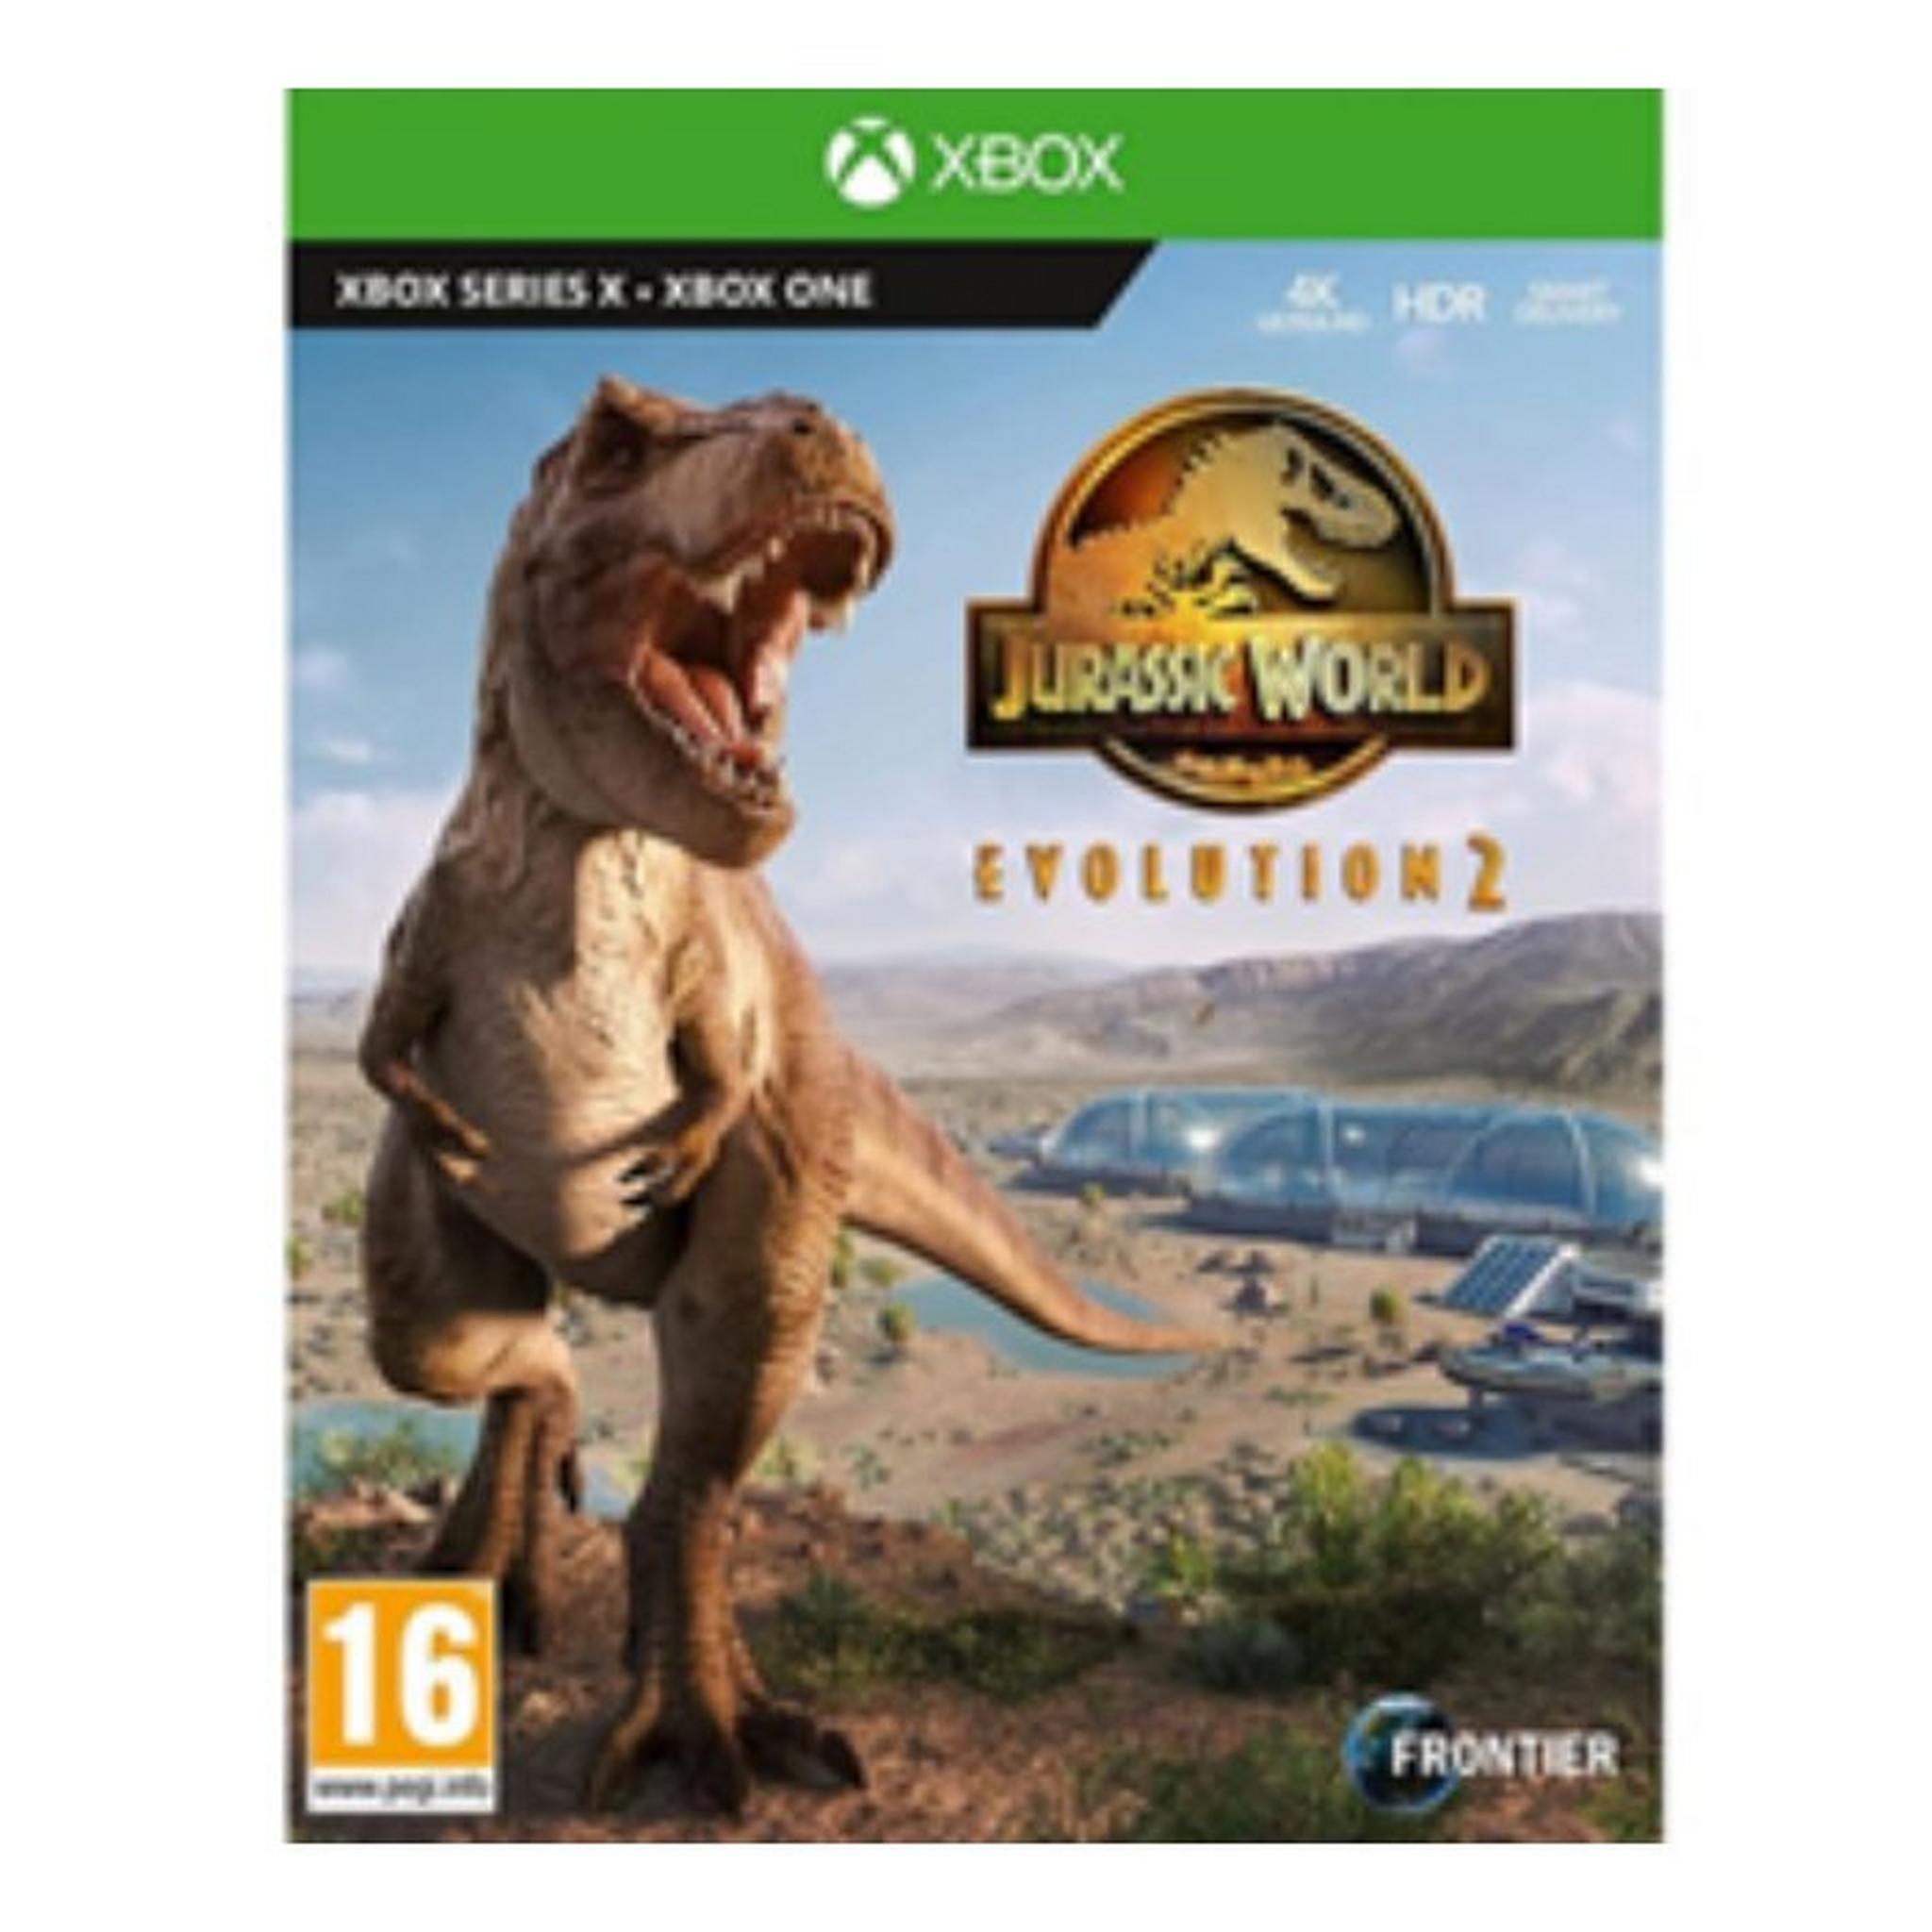 Jurassic World Evolution 2 - Xbox Series X Game